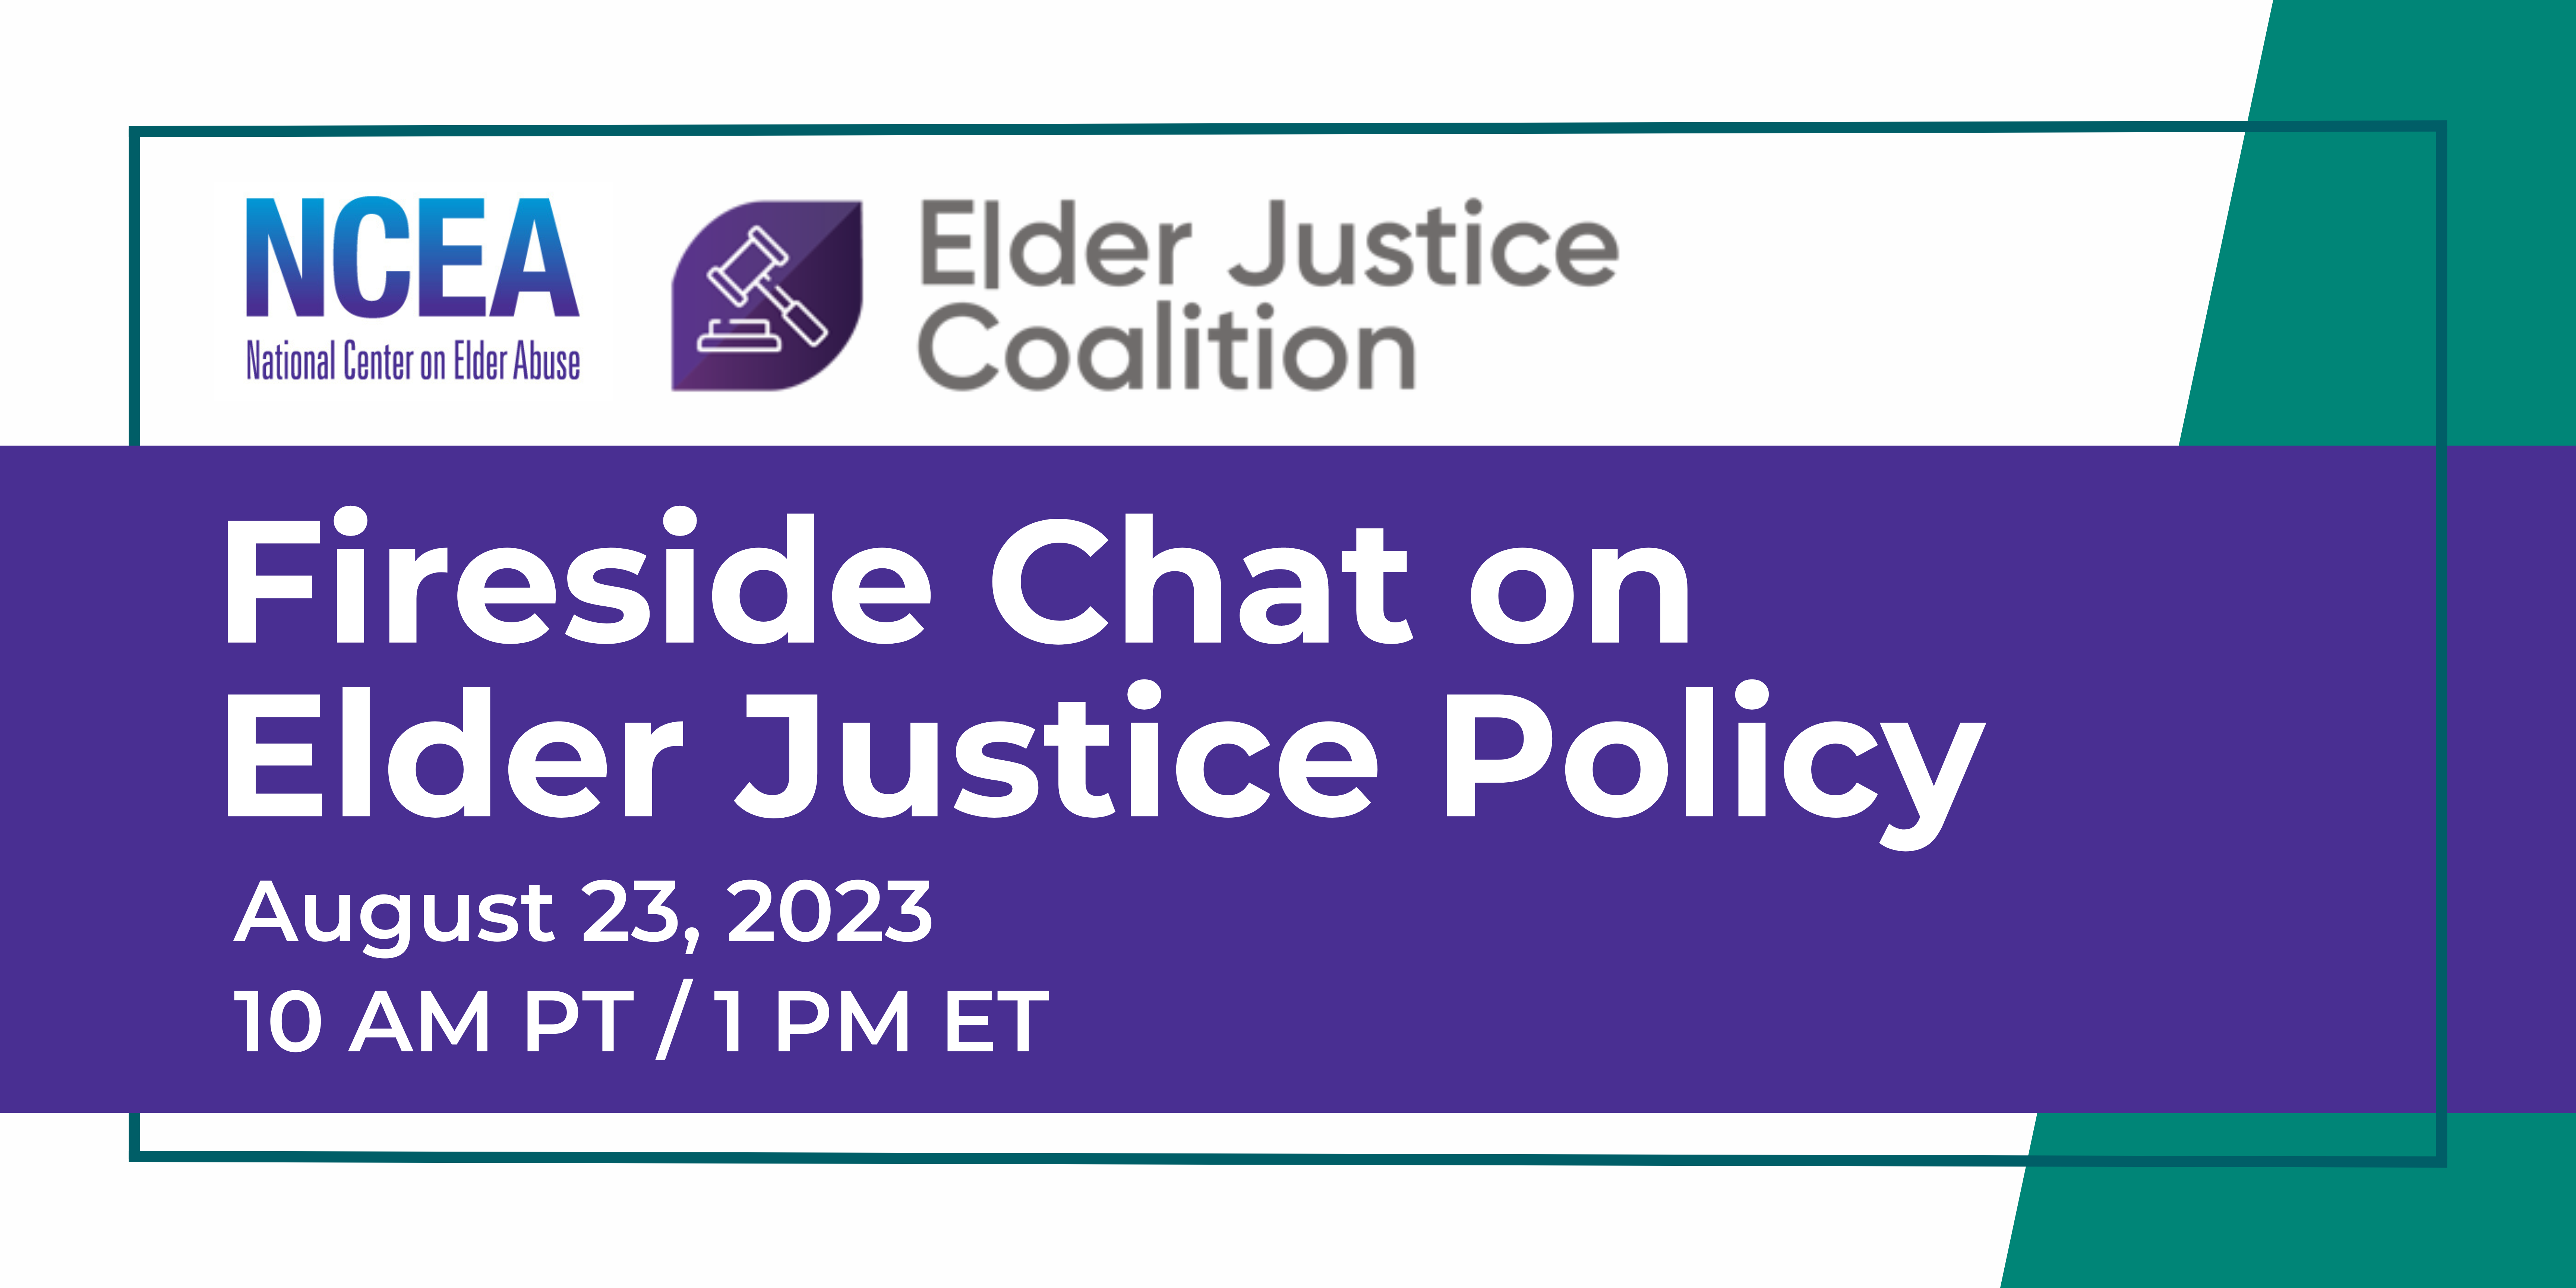 National Center on Elder Abuse and Elder Justice Coalition Fireside Chat on Elder Justice Policy. August 23, 2023. 10 AM PT. 1 PM ET.